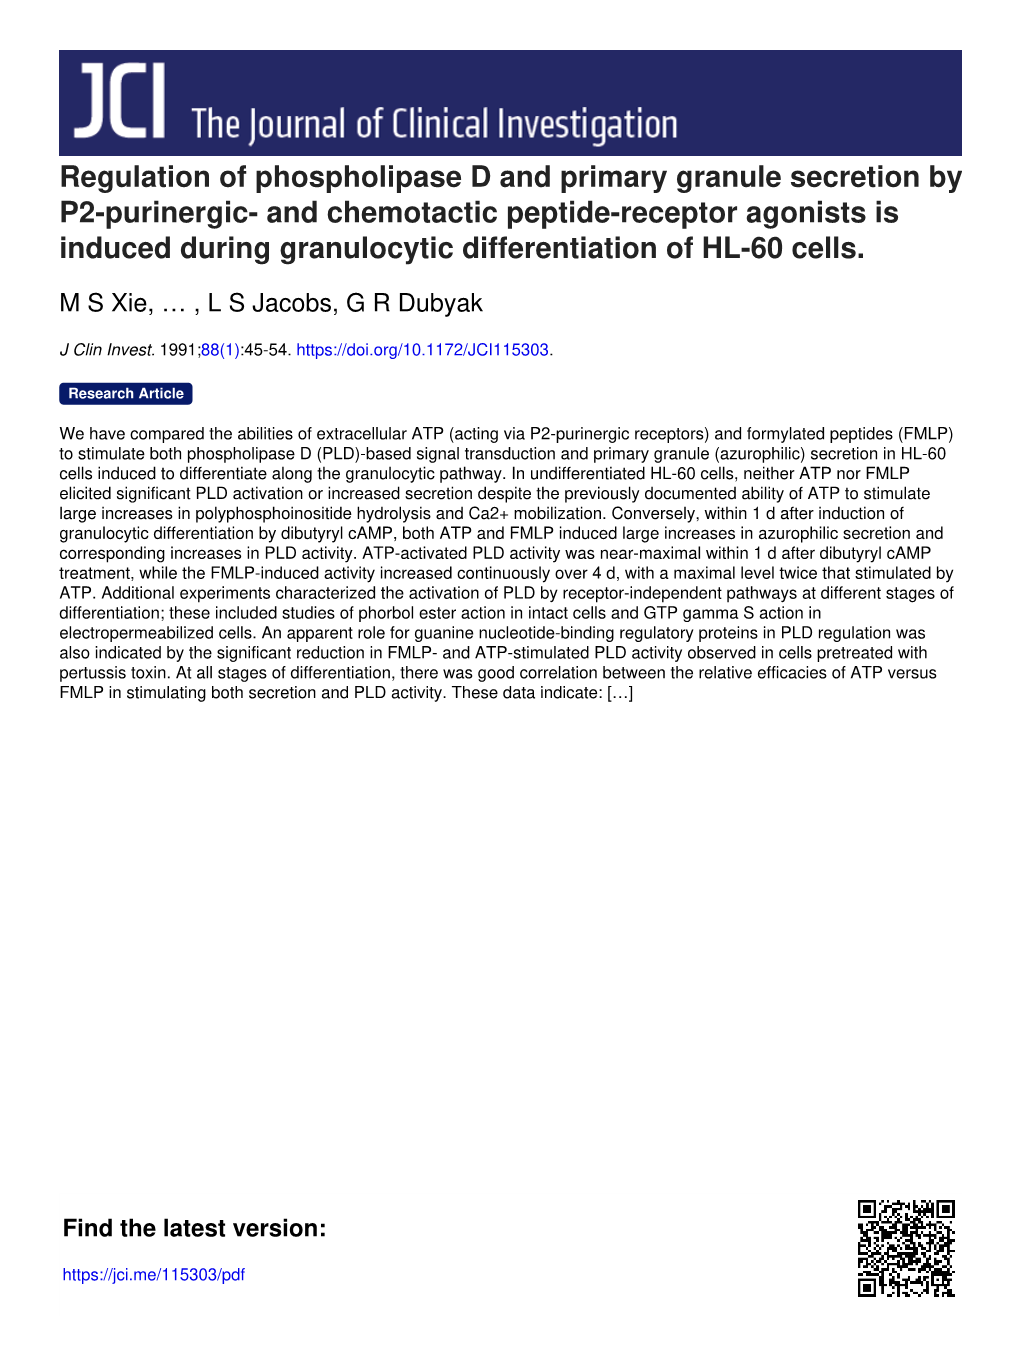 Regulation of Phospholipase D and Primary Granule Secretion By